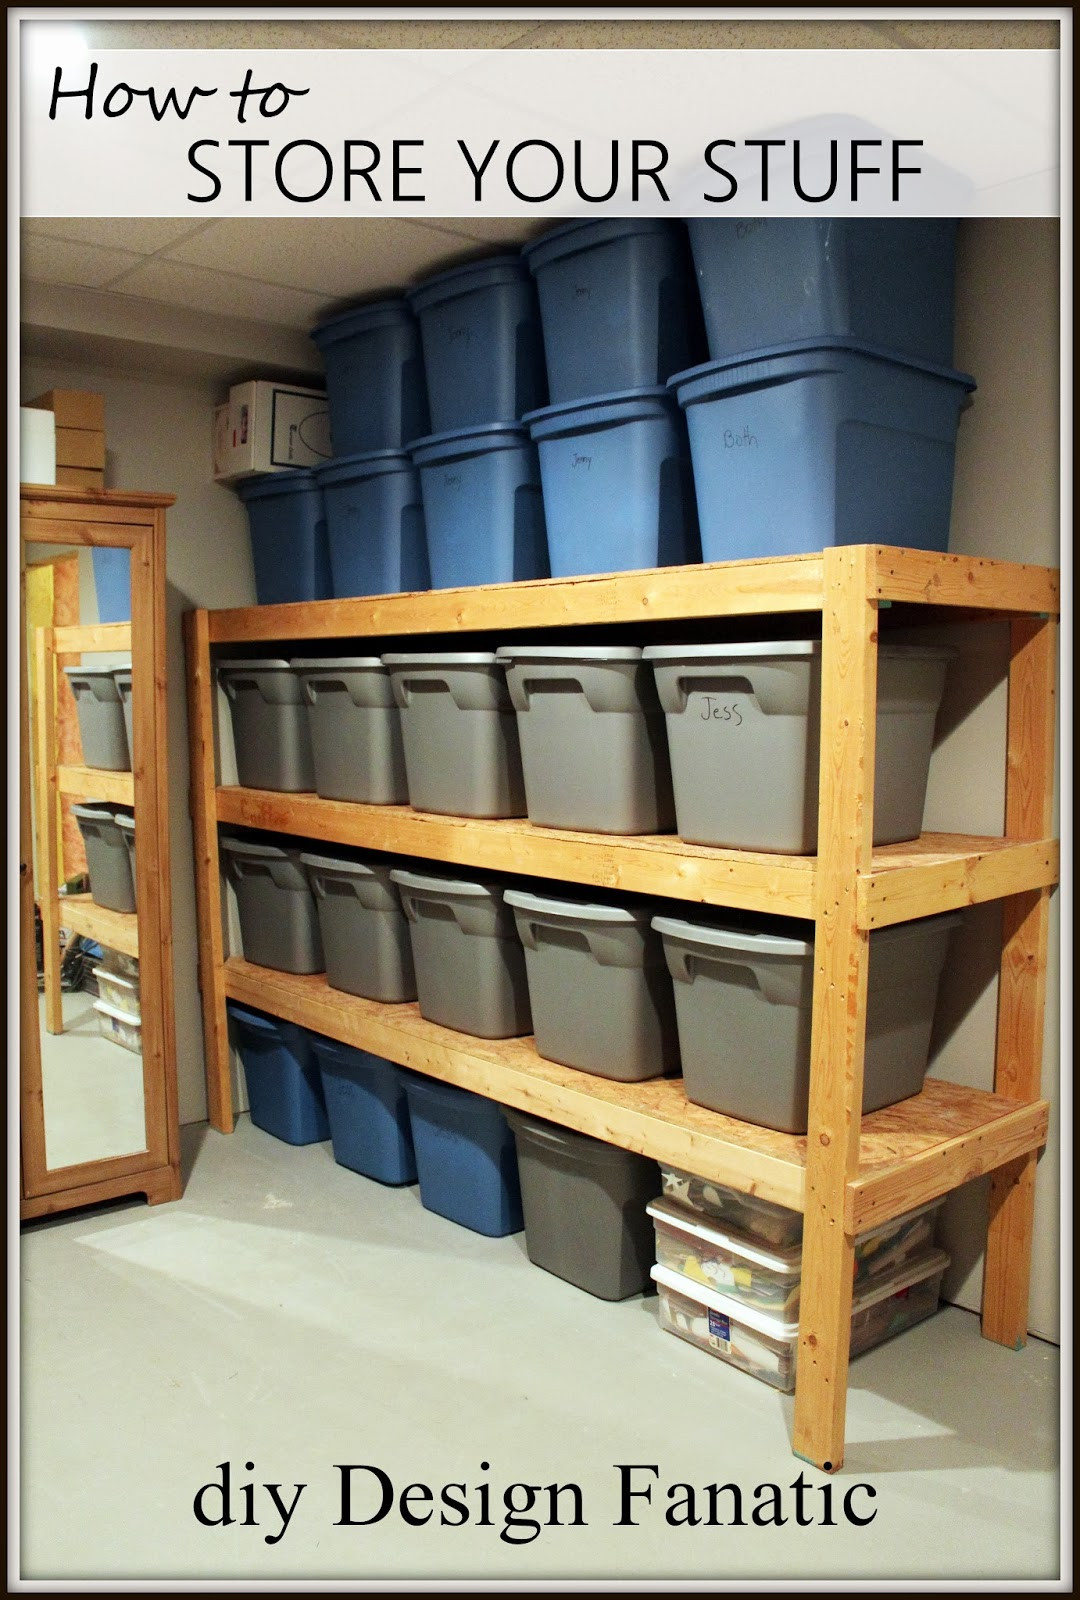 Best ideas about DIY Storage Shelf Plans
. Save or Pin Storage Shelf Plans Basement PDF Woodworking Now.